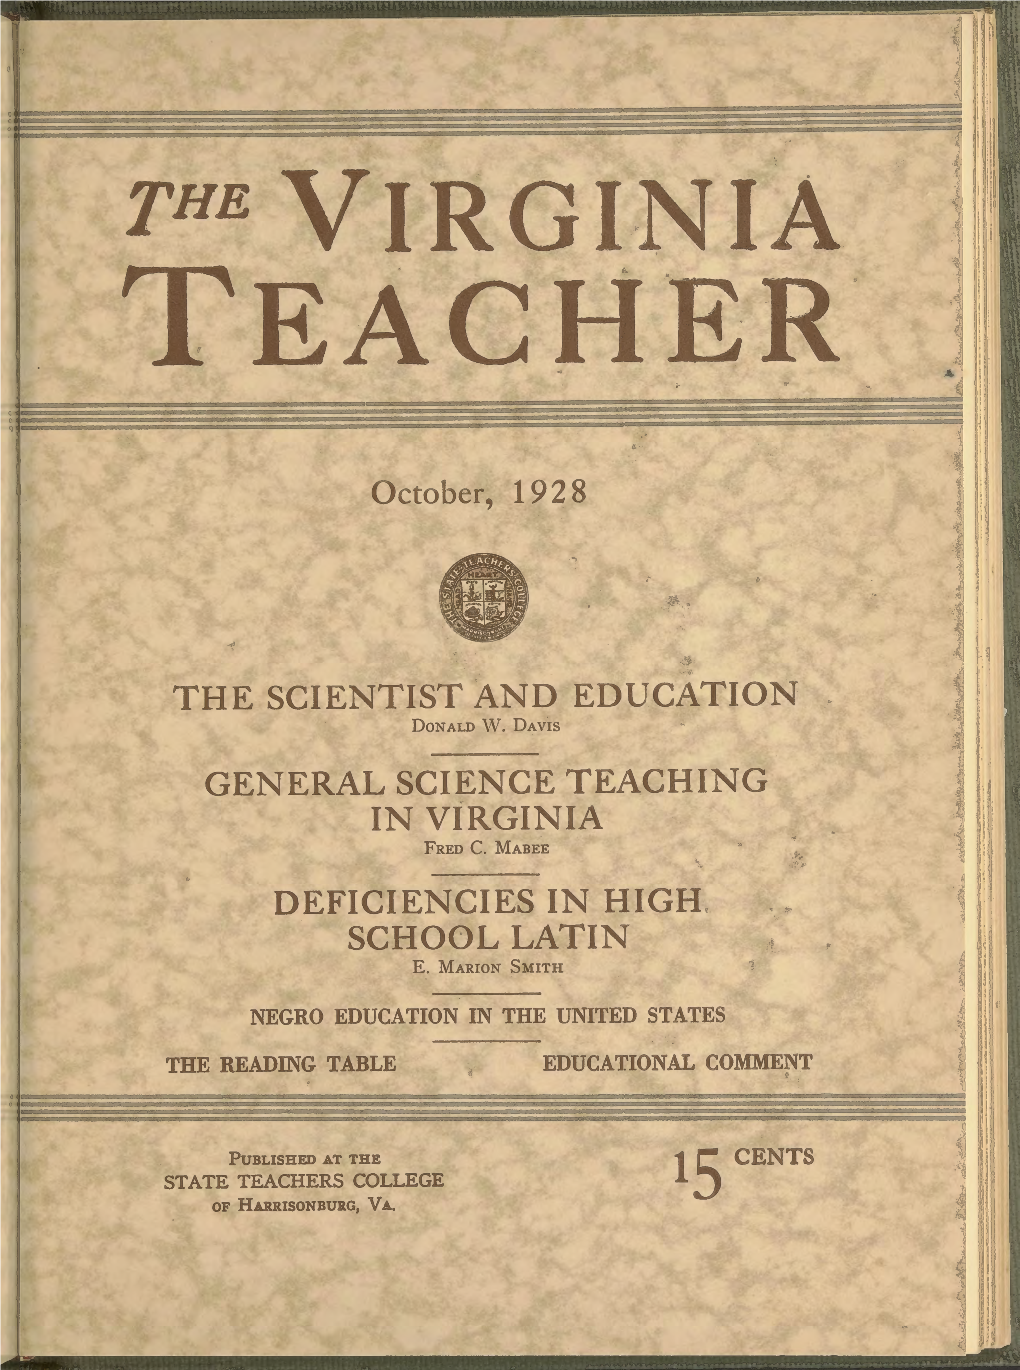 The Virginia Teacher, Vol. 9, Iss. 8, October 1928